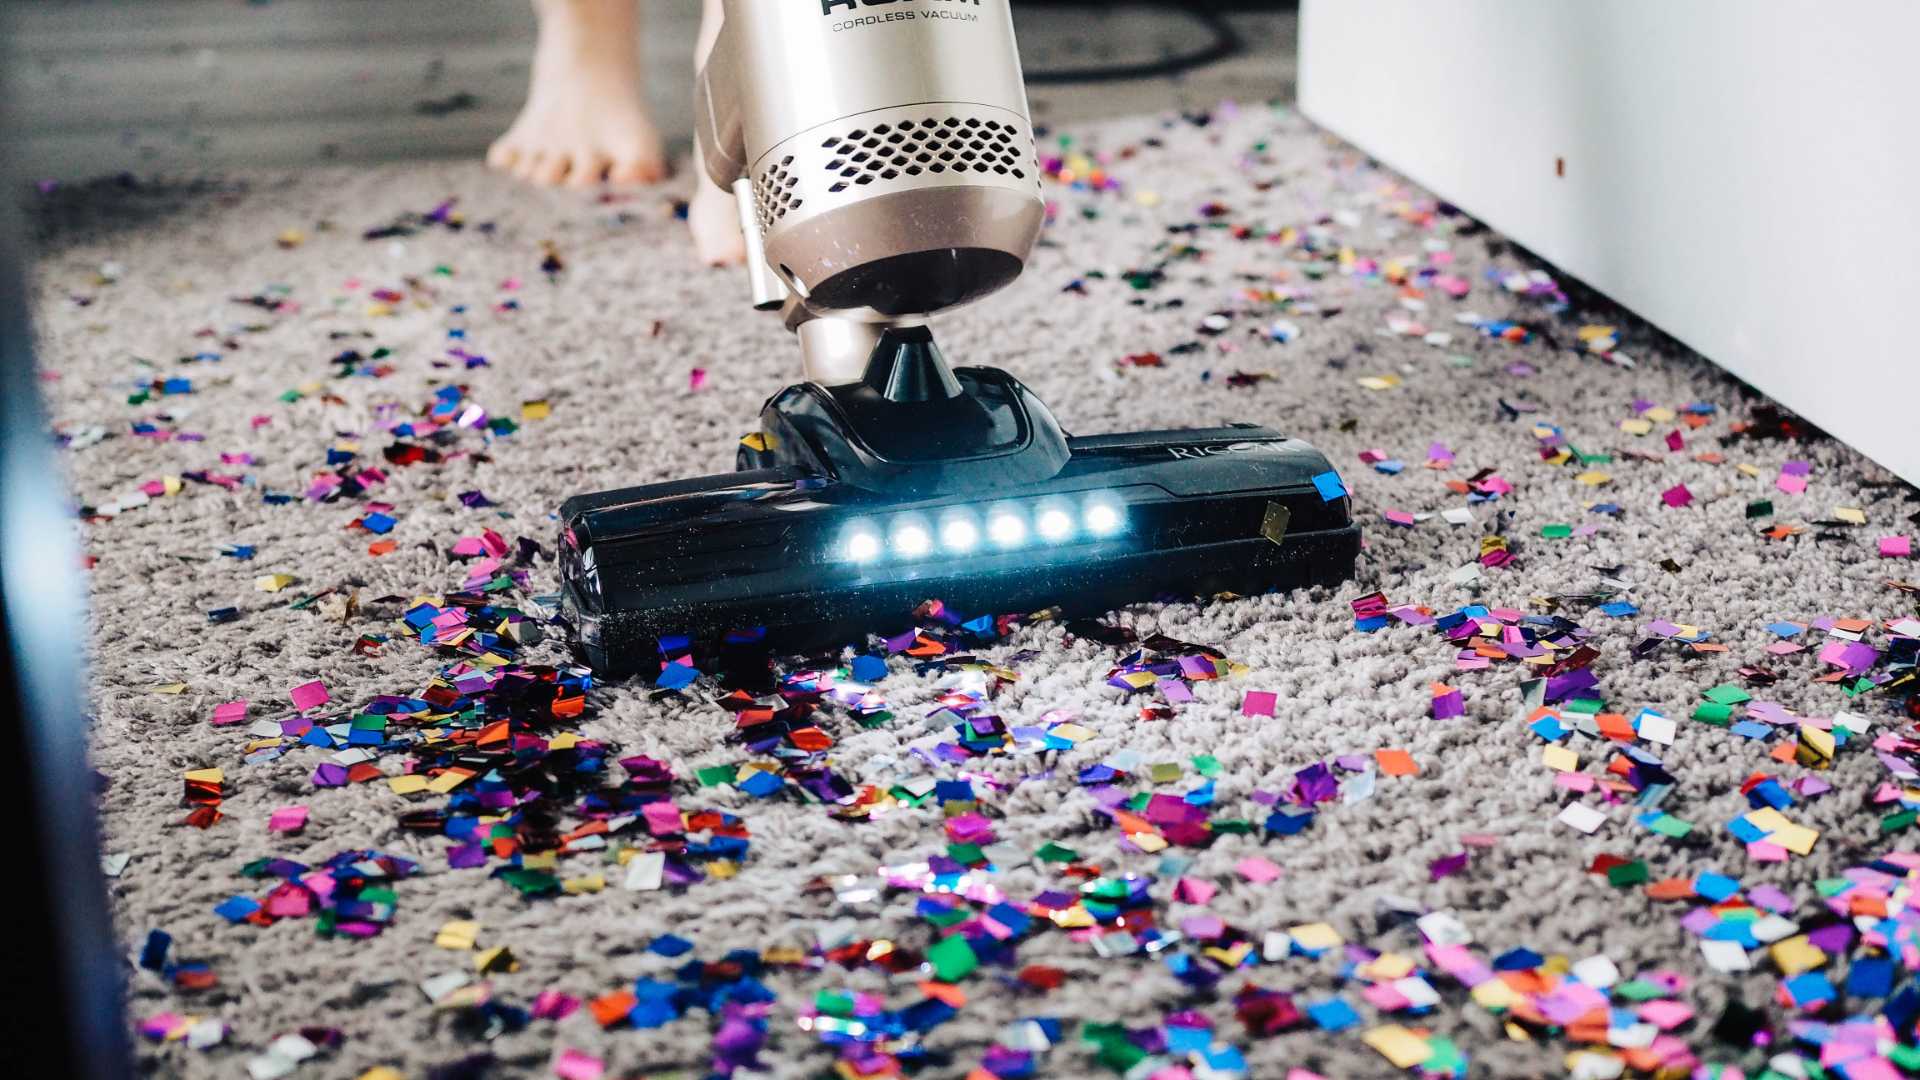 Vacuuming glitter off the floor